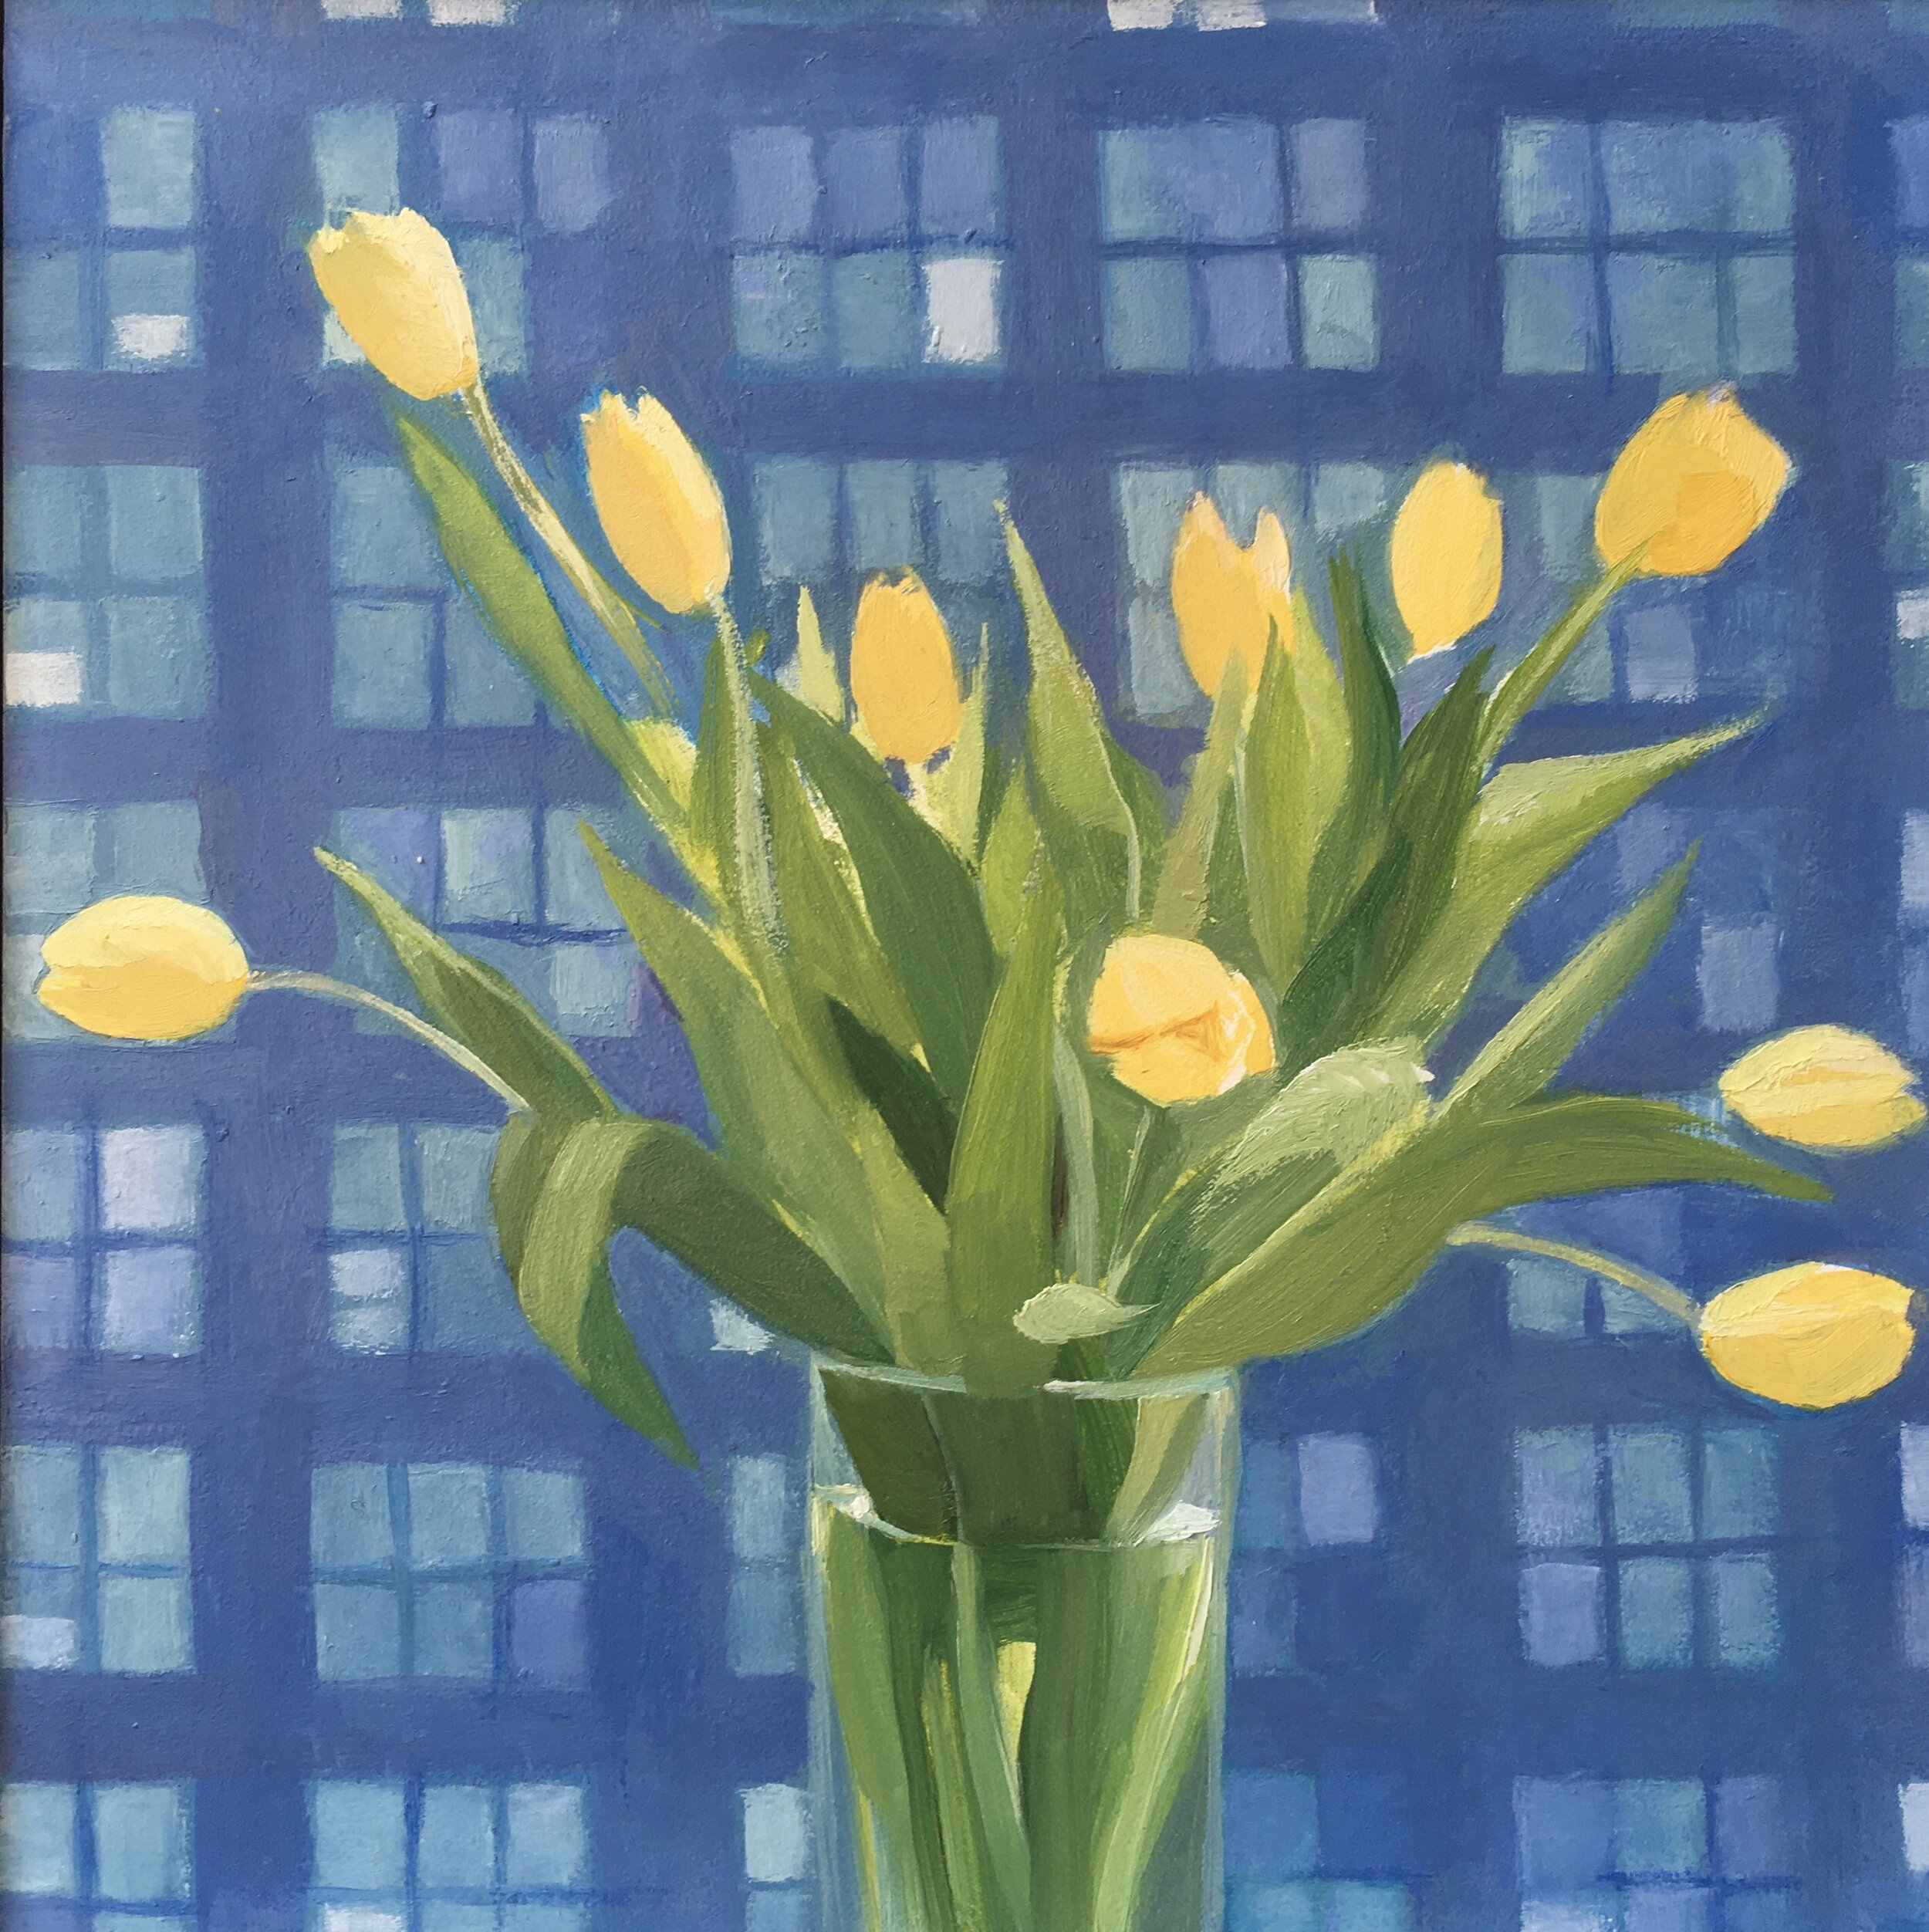 Yellow Tulips and City Windows